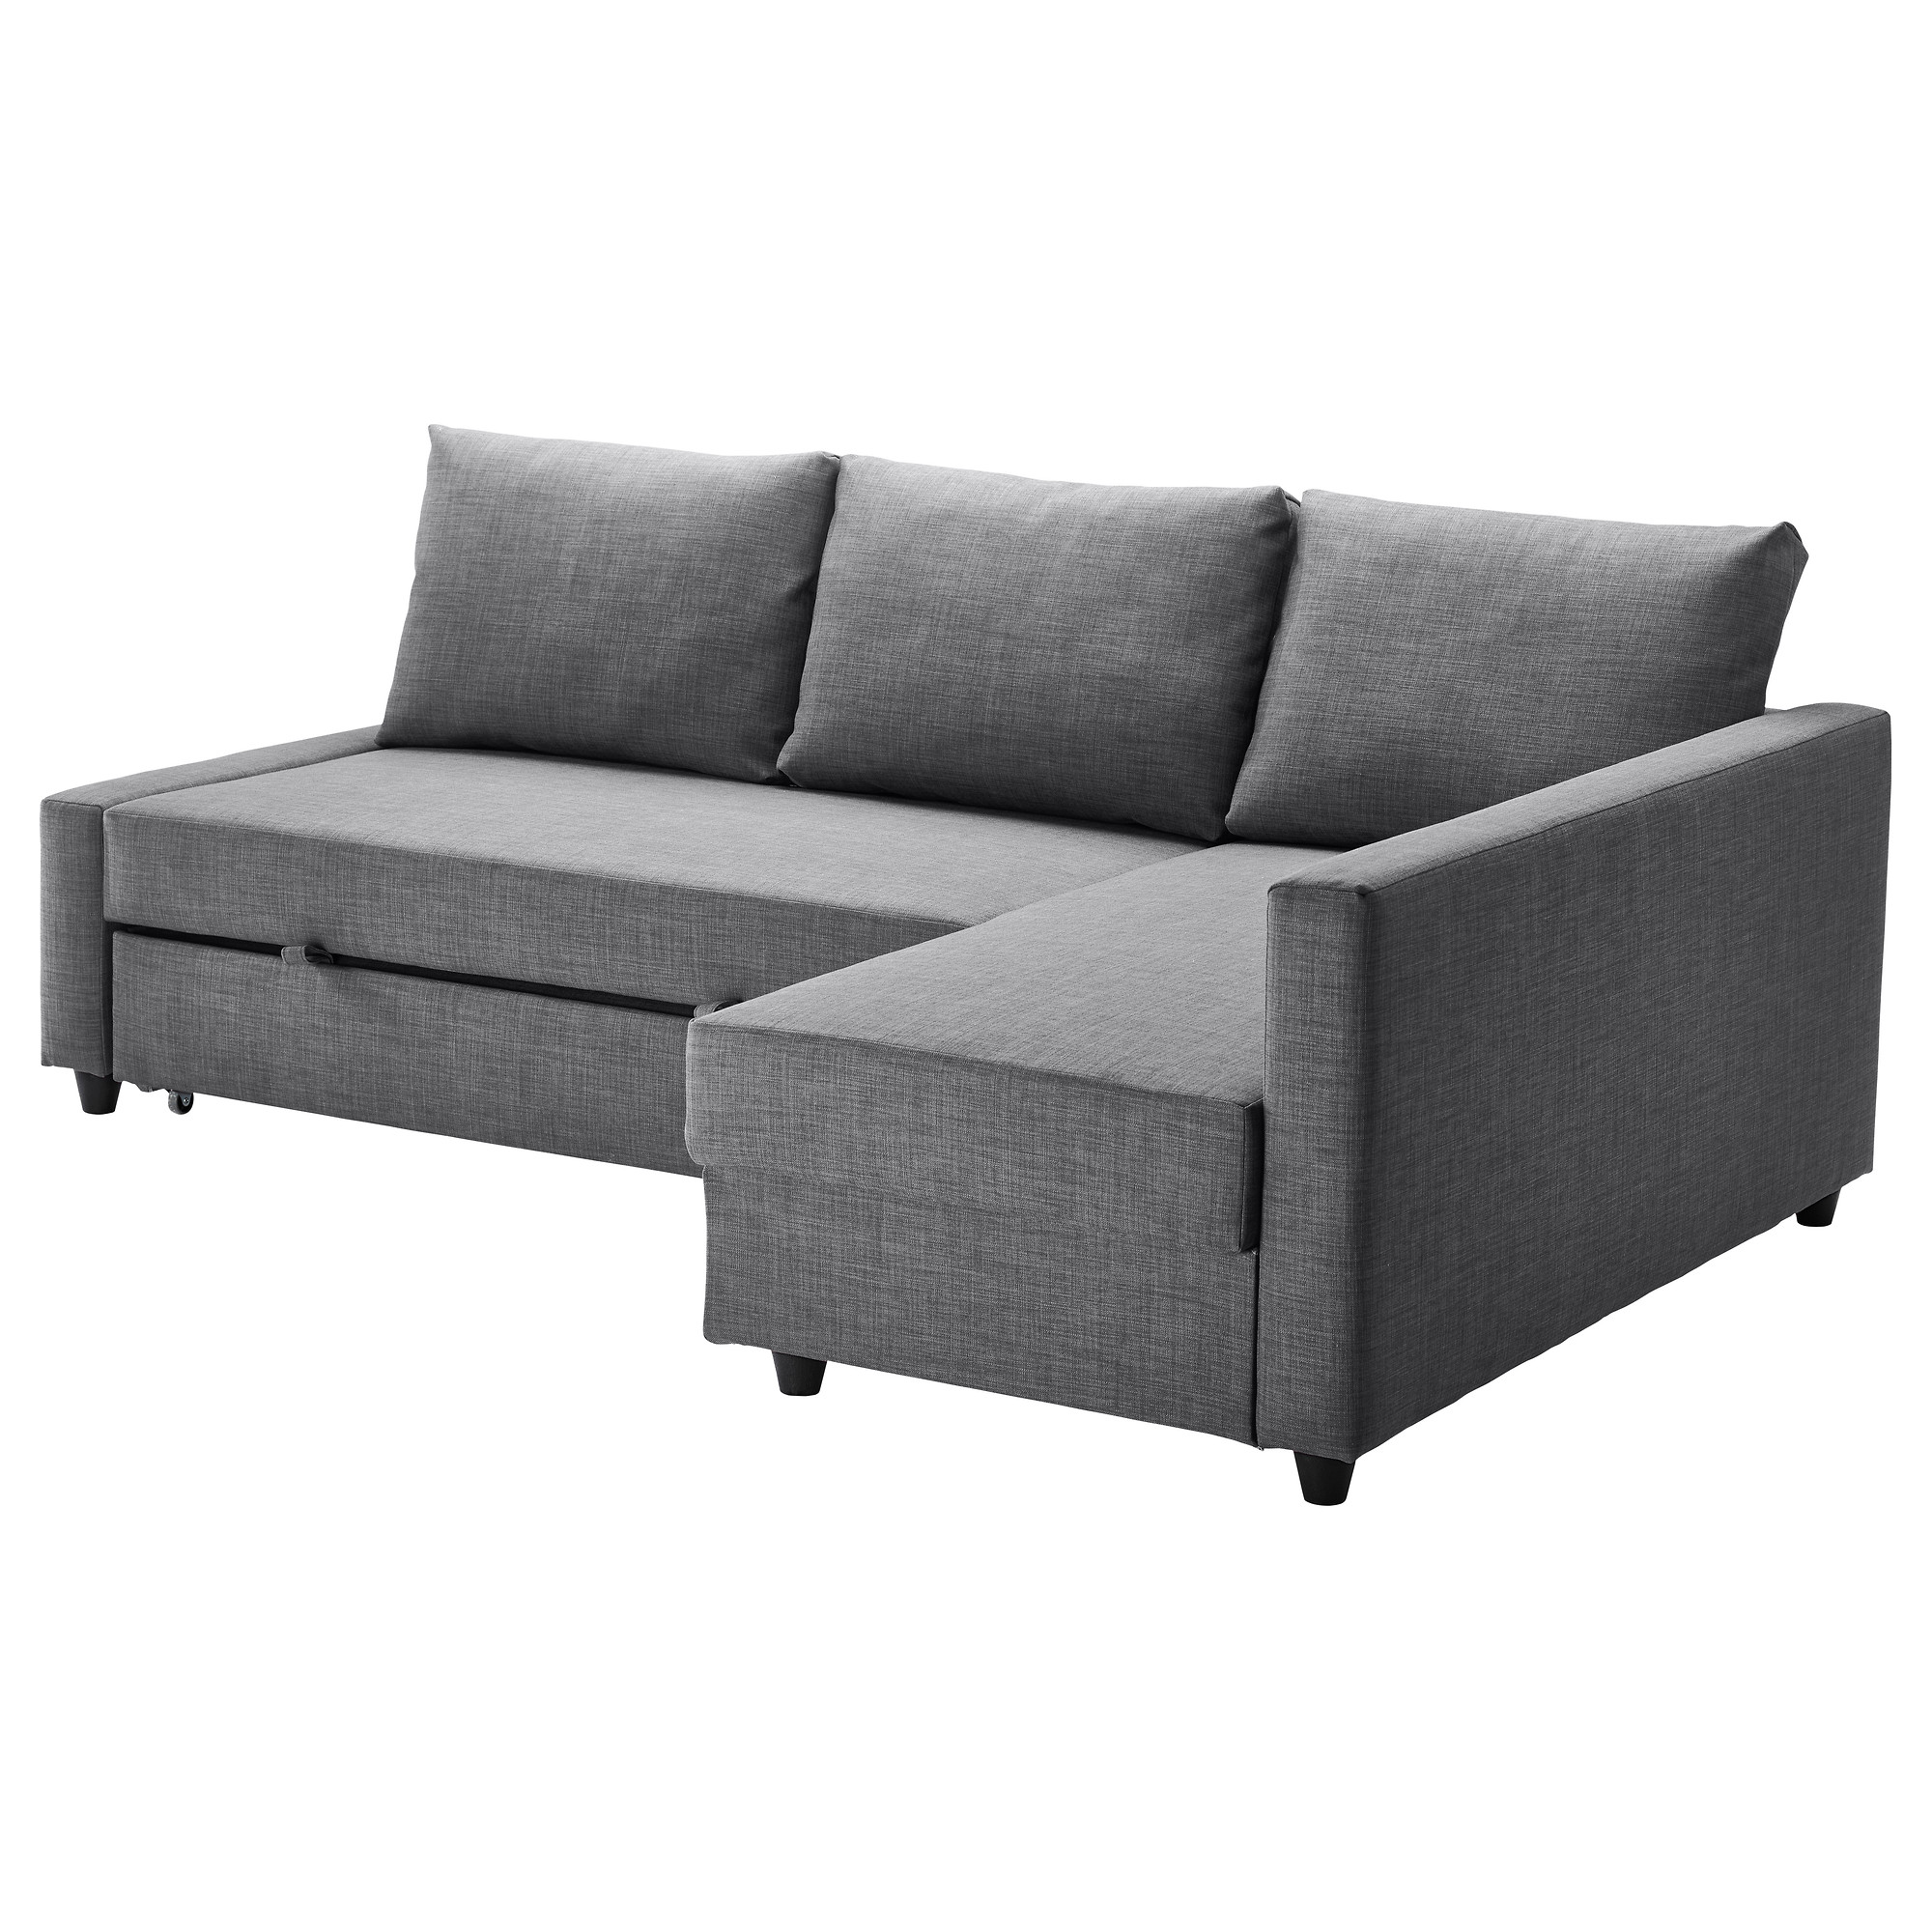 sofa sleeper friheten sleeper sectional,3 seat w/storage - skiftebo dark gray - ikea EQIZMMA